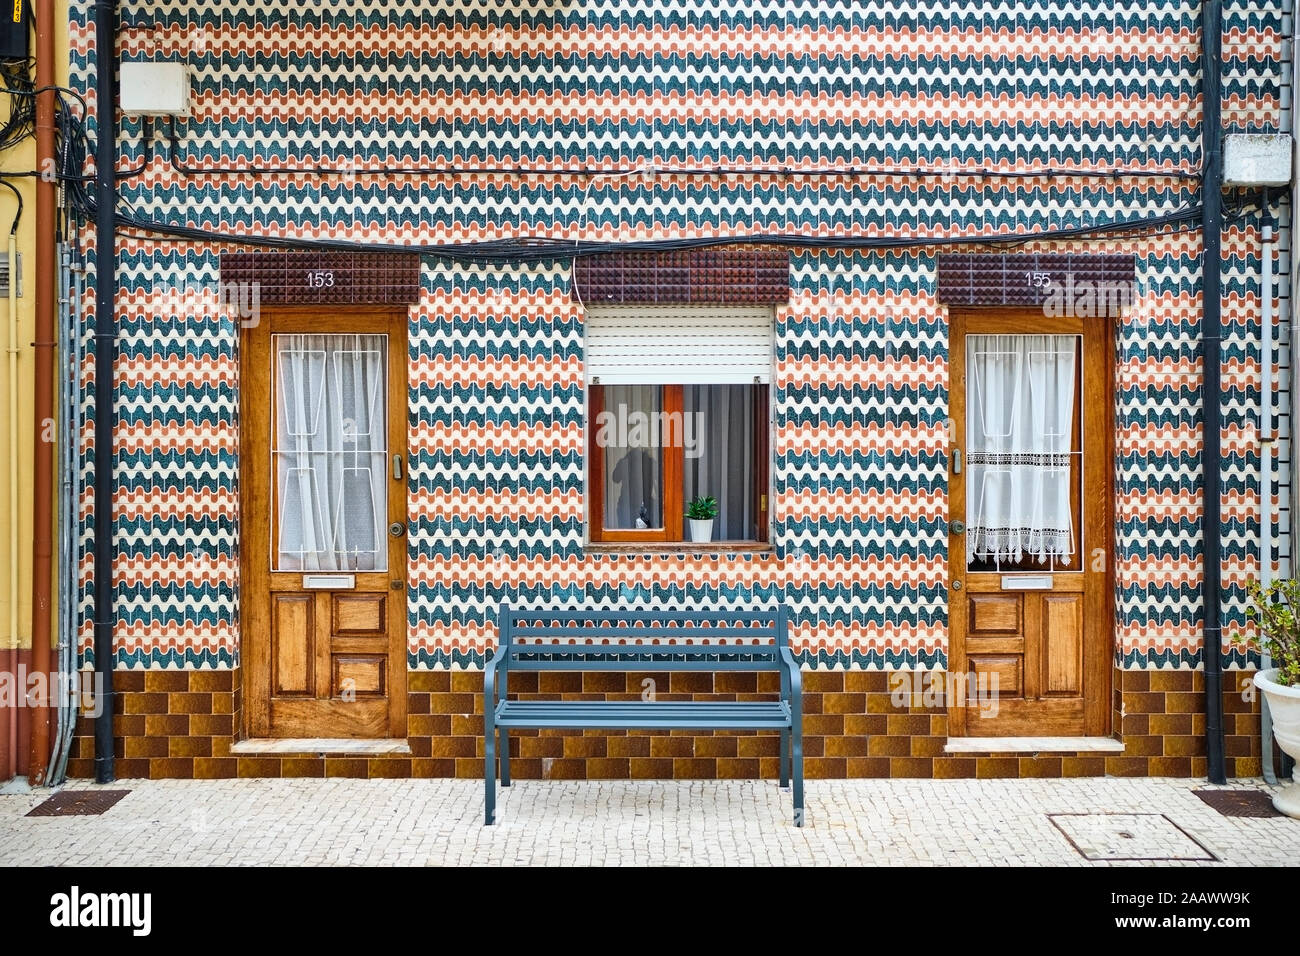 Portugal, Porto, Afurada, Unique ornate house facade seen from pavement Stock Photo